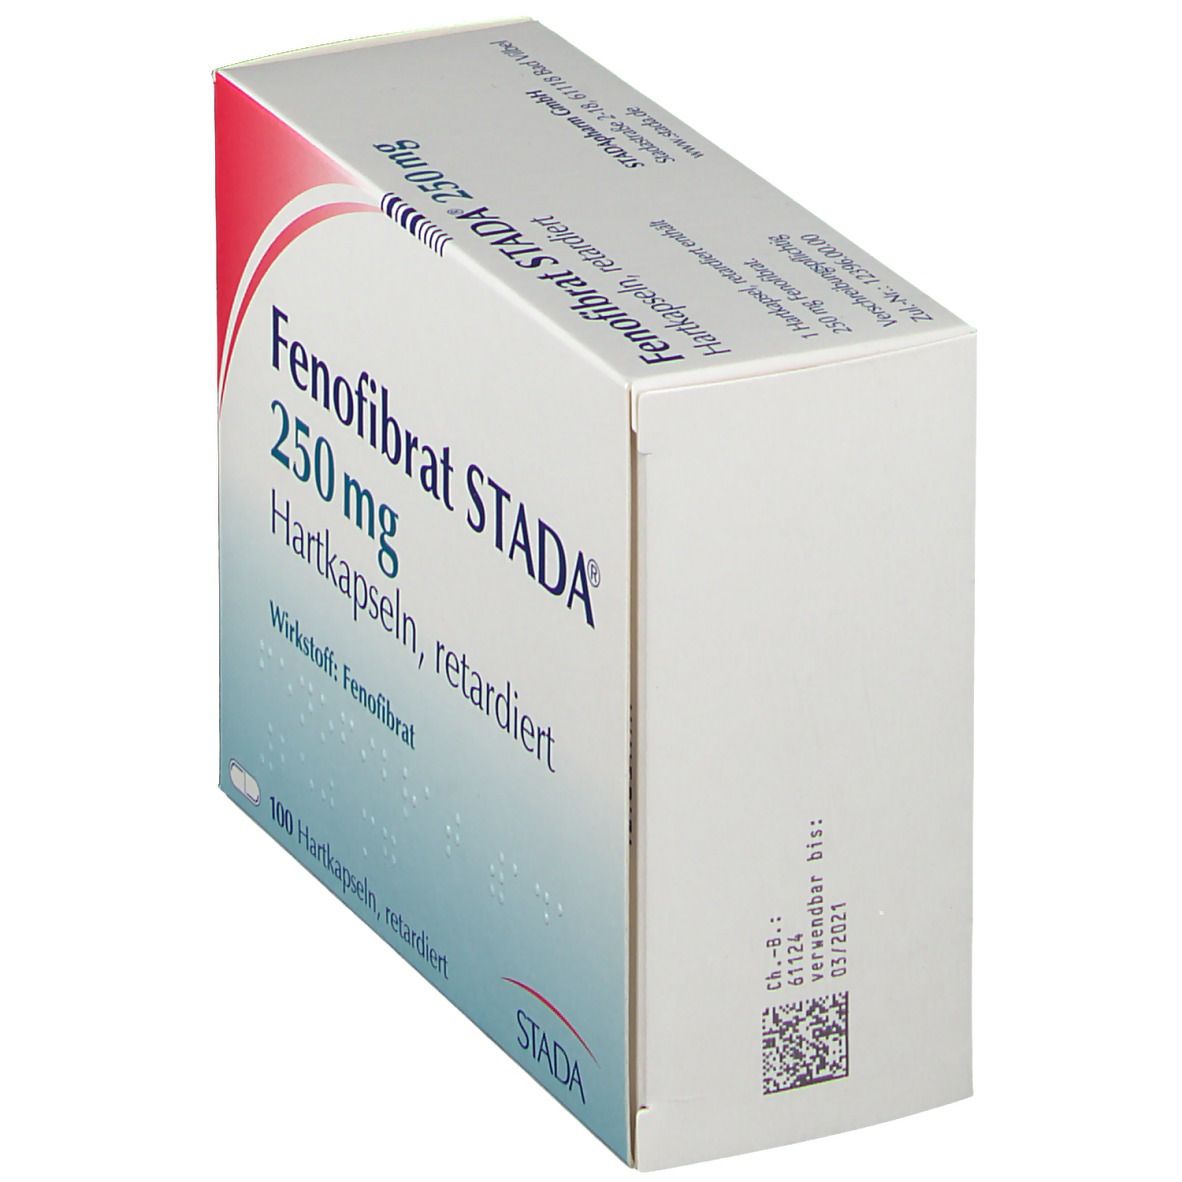 Fenofibrat Stada® 250 mg Retardkapseln